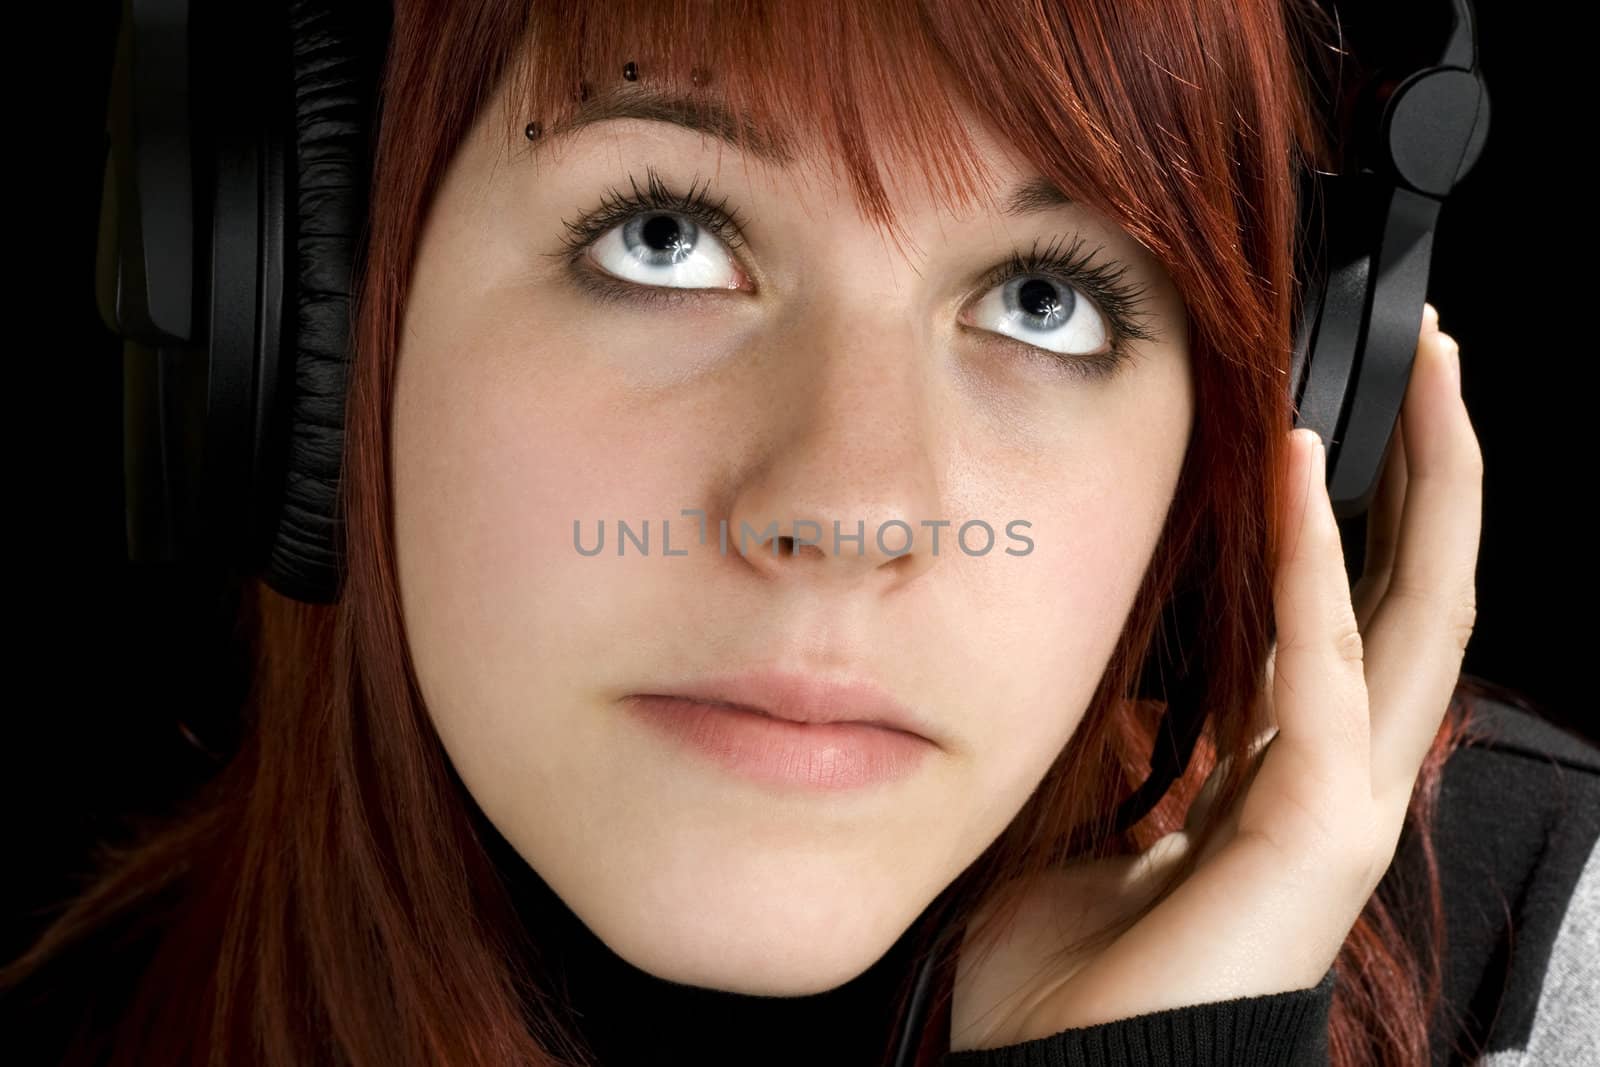 Girl listening to music by domencolja